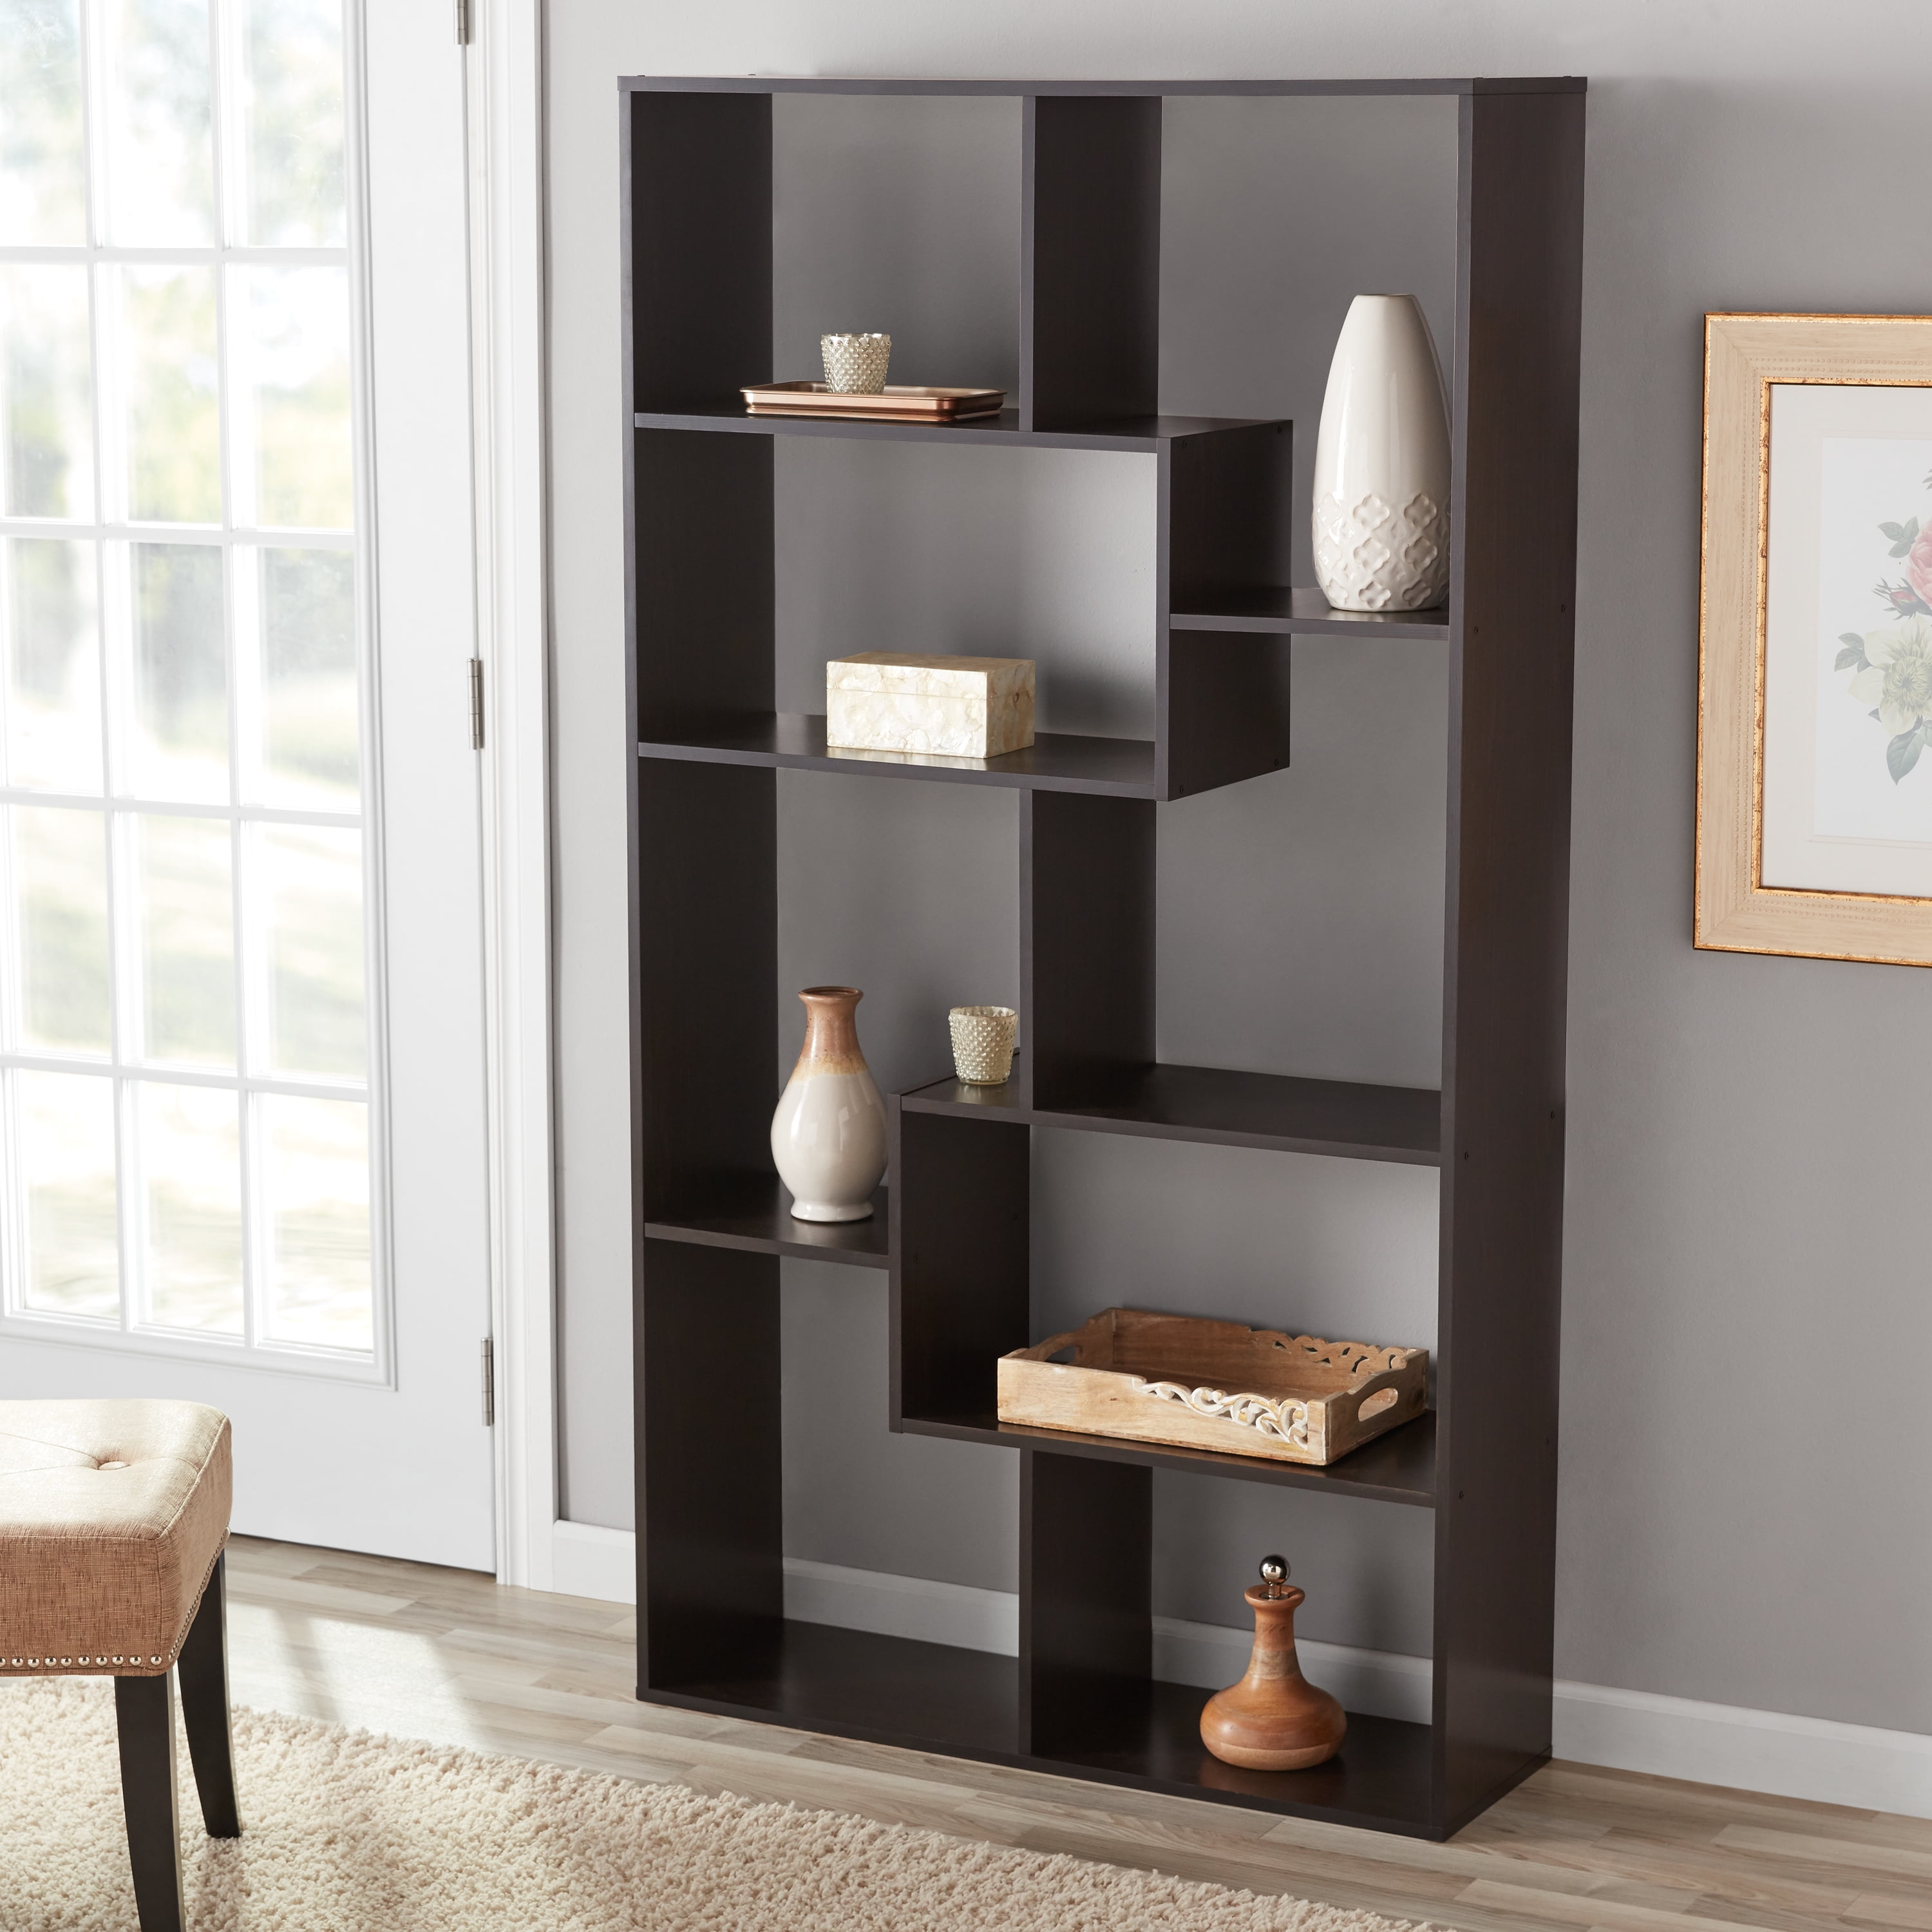 8-Shelf Bookcase Storage Wall Bookshelf Cubby Holder Rack Home Furniture 